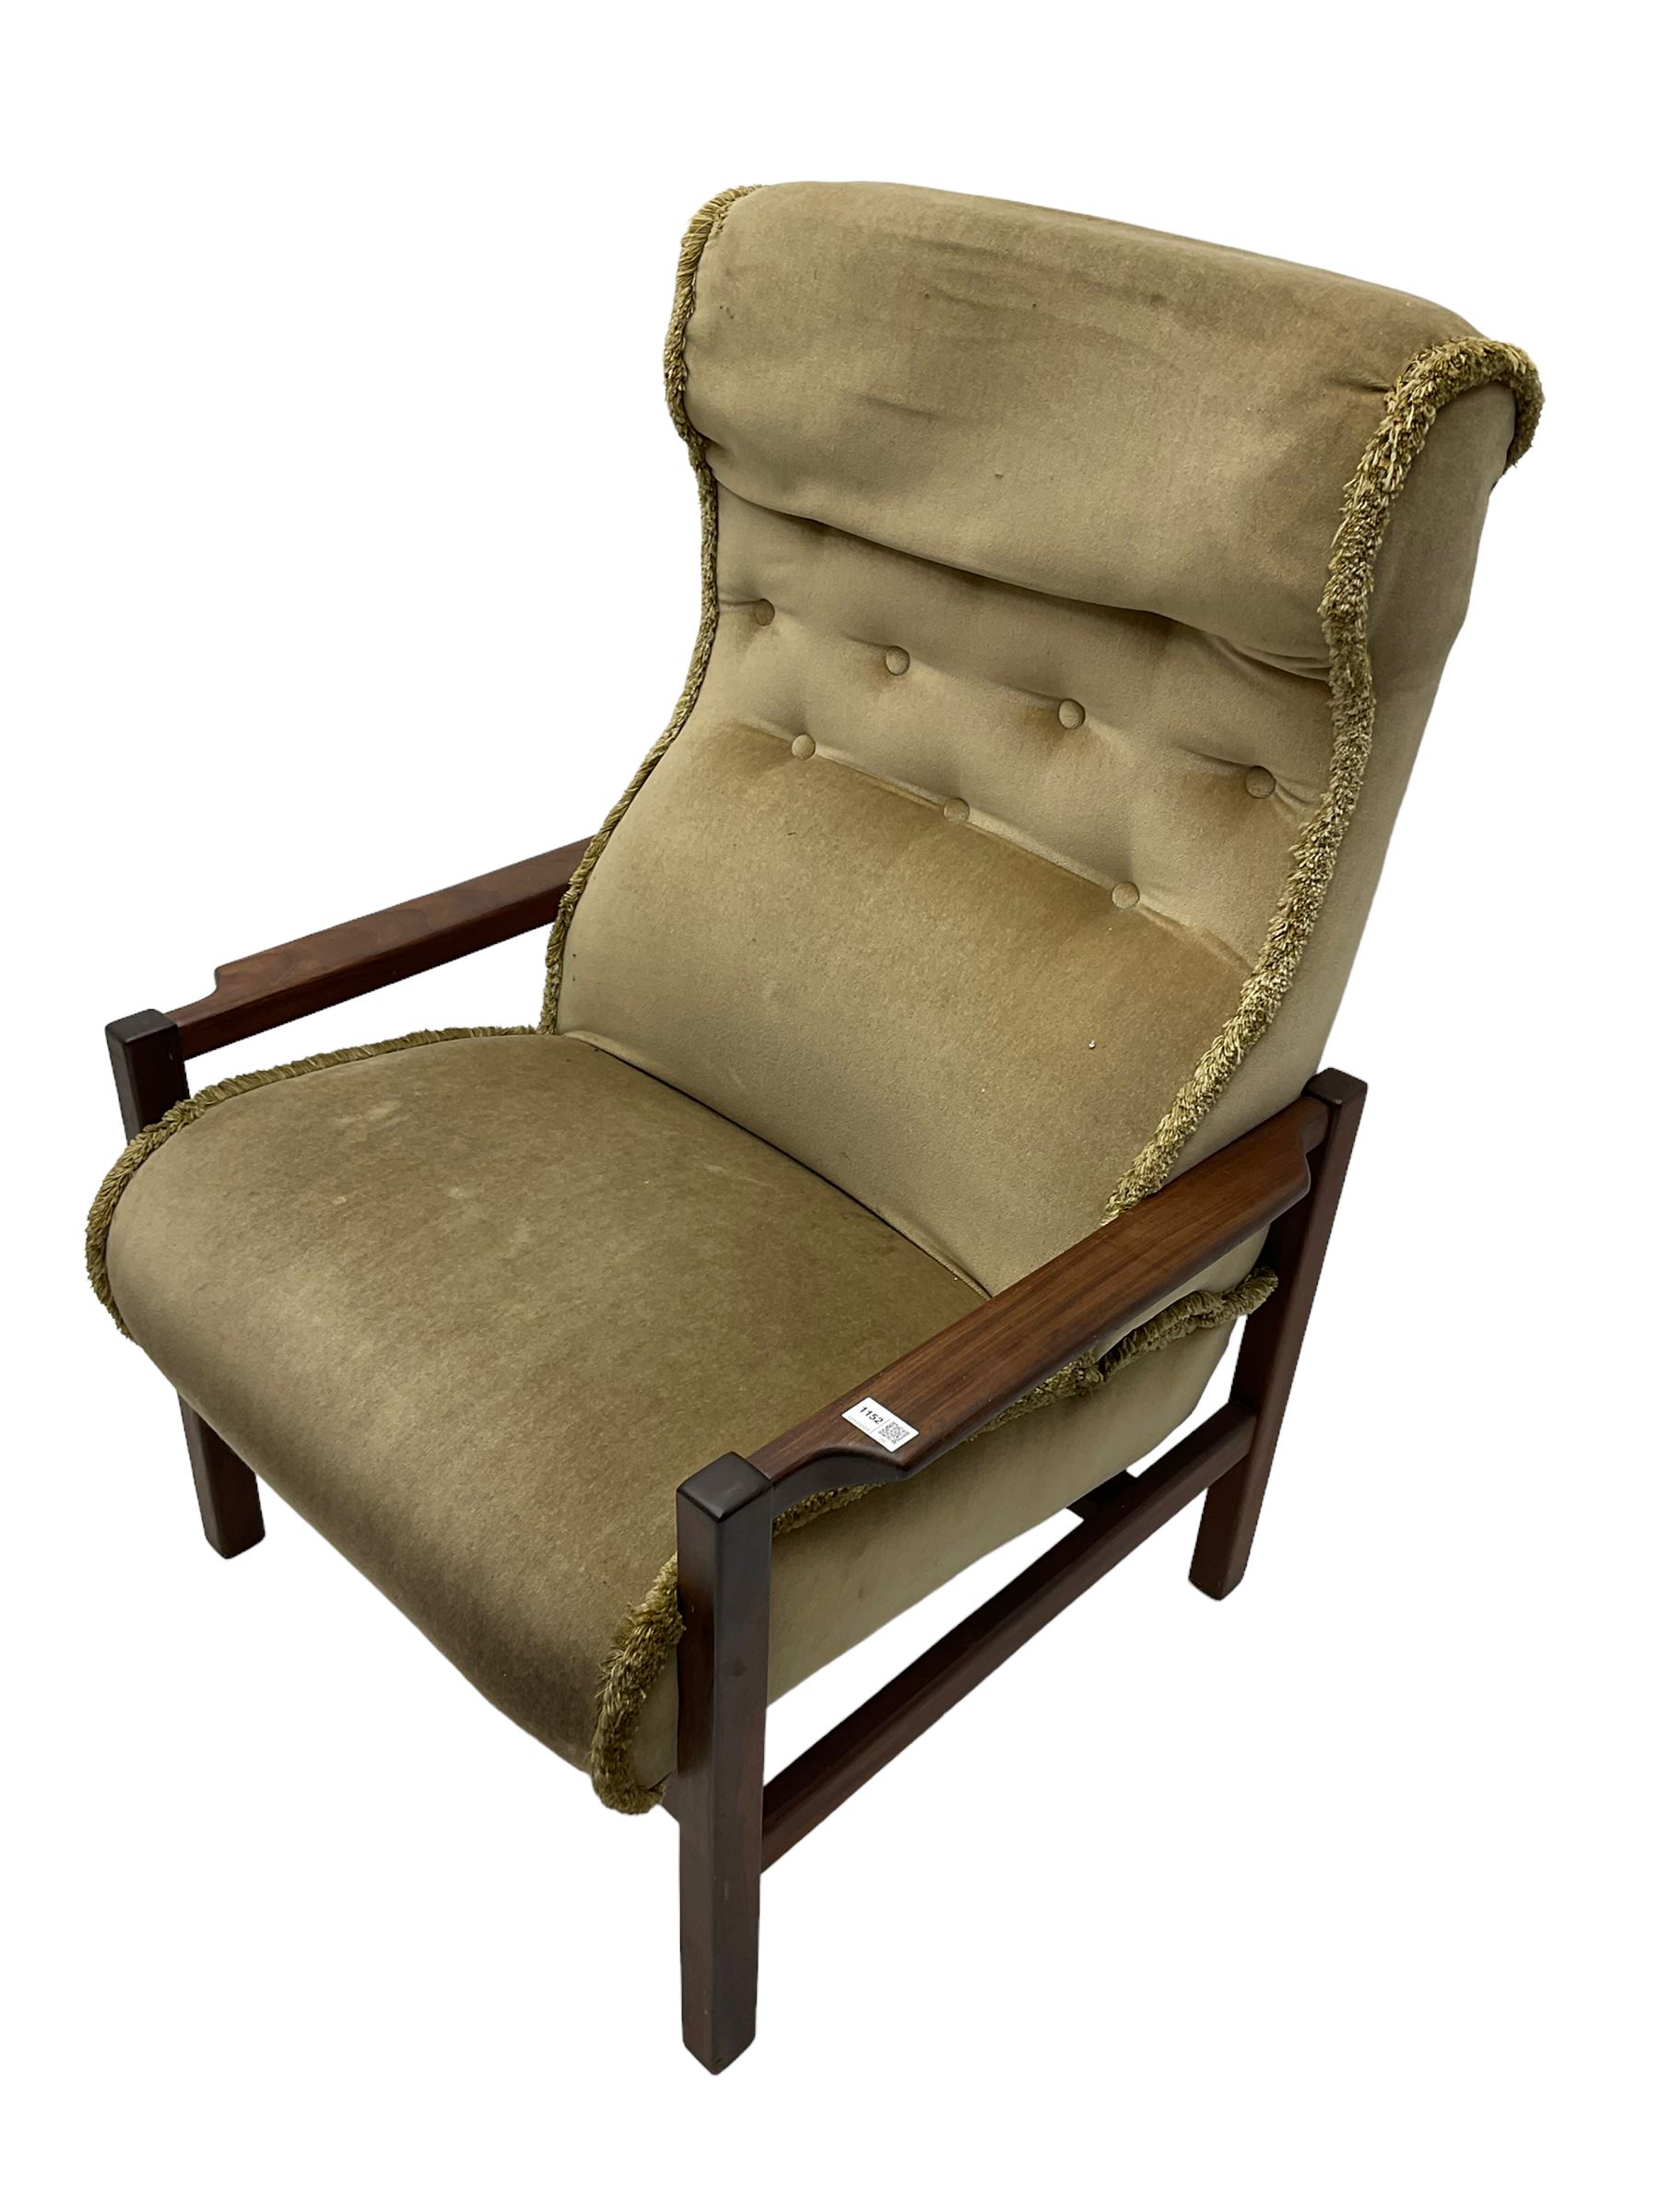 Mid-20th century teak framed upholstered armchair - Image 6 of 6